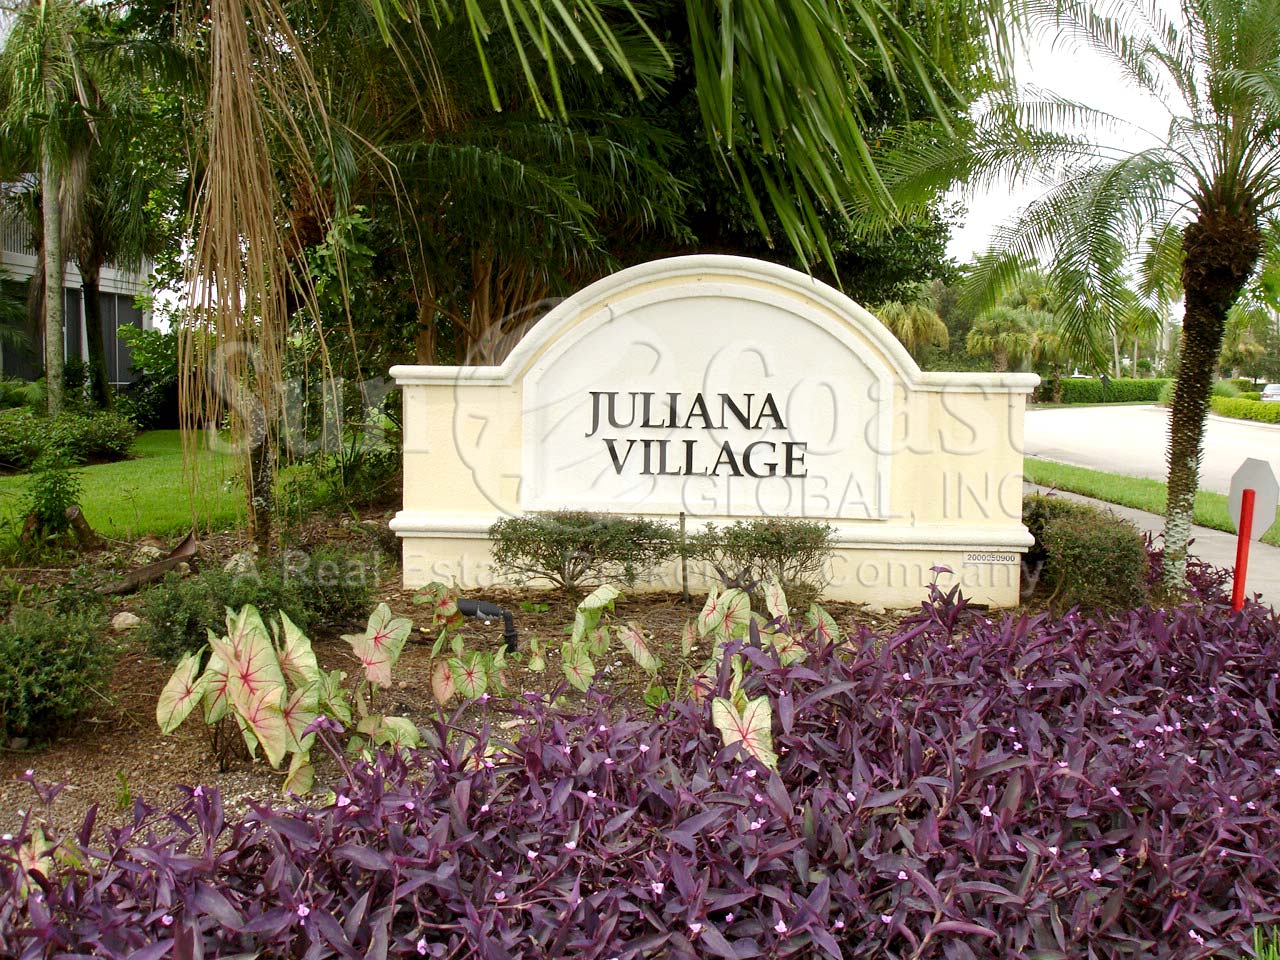 Juliana Village sign.